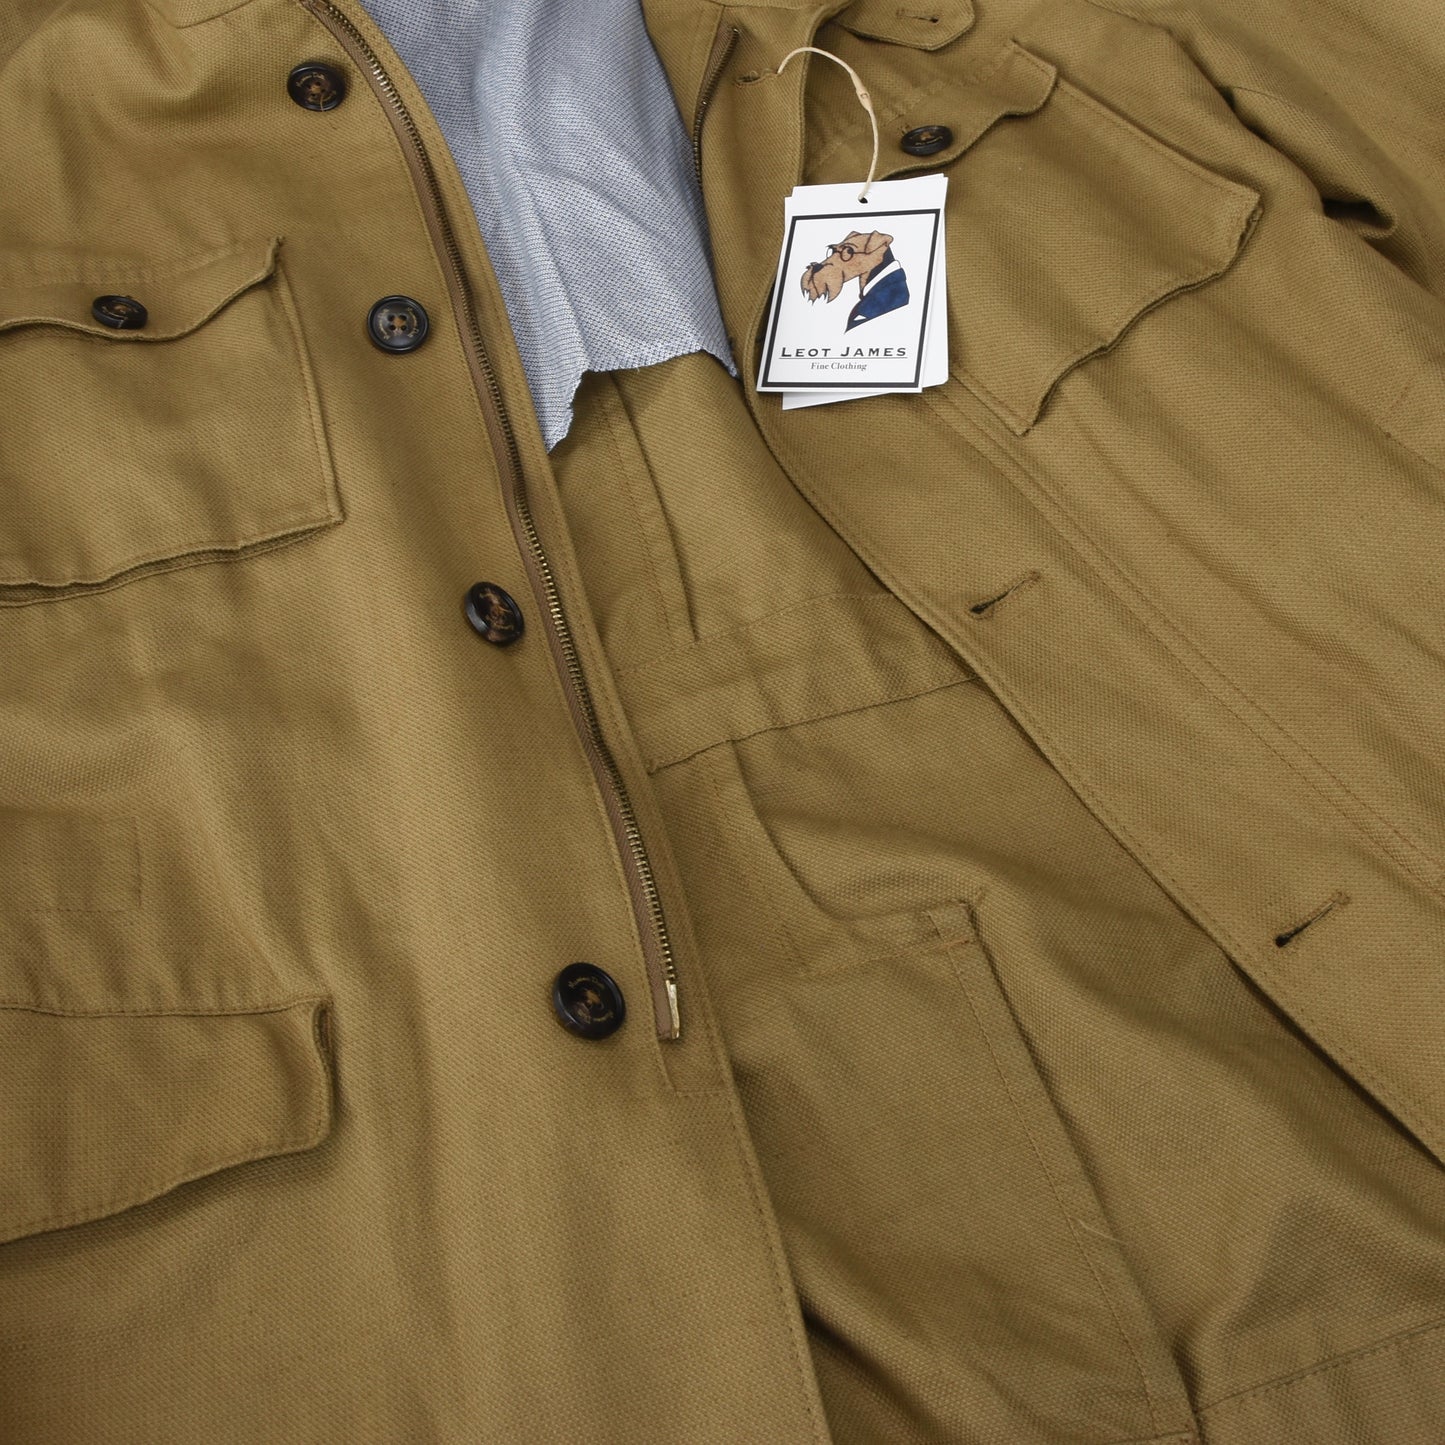 Massimo Dutti Cotton-Linen Safari Jacket Size M - Tan